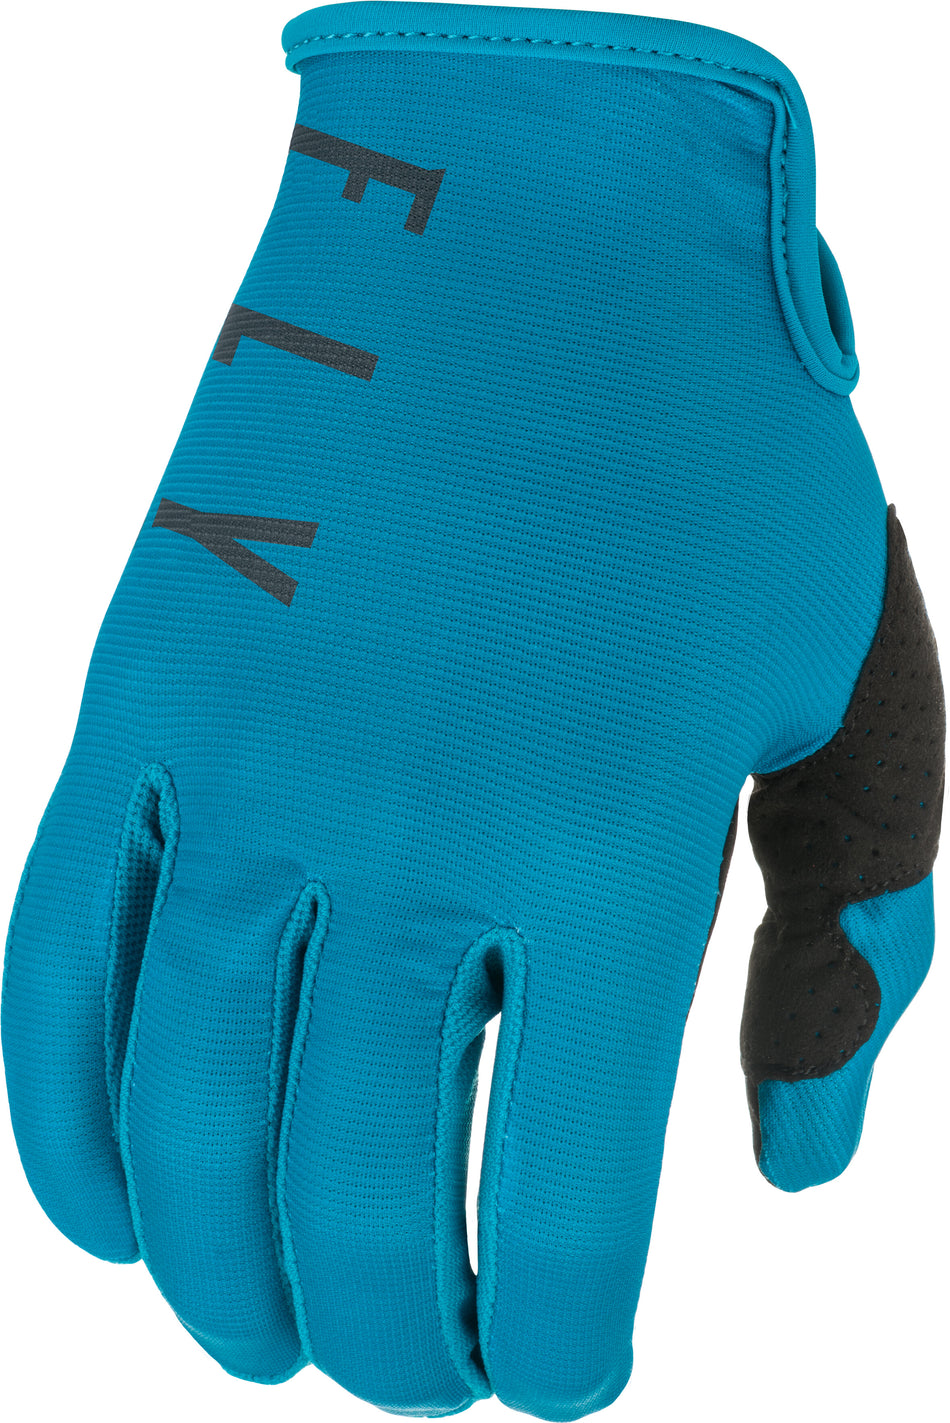 FLY RACING Lite Gloves Blue/Grey Sz 11 374-71111